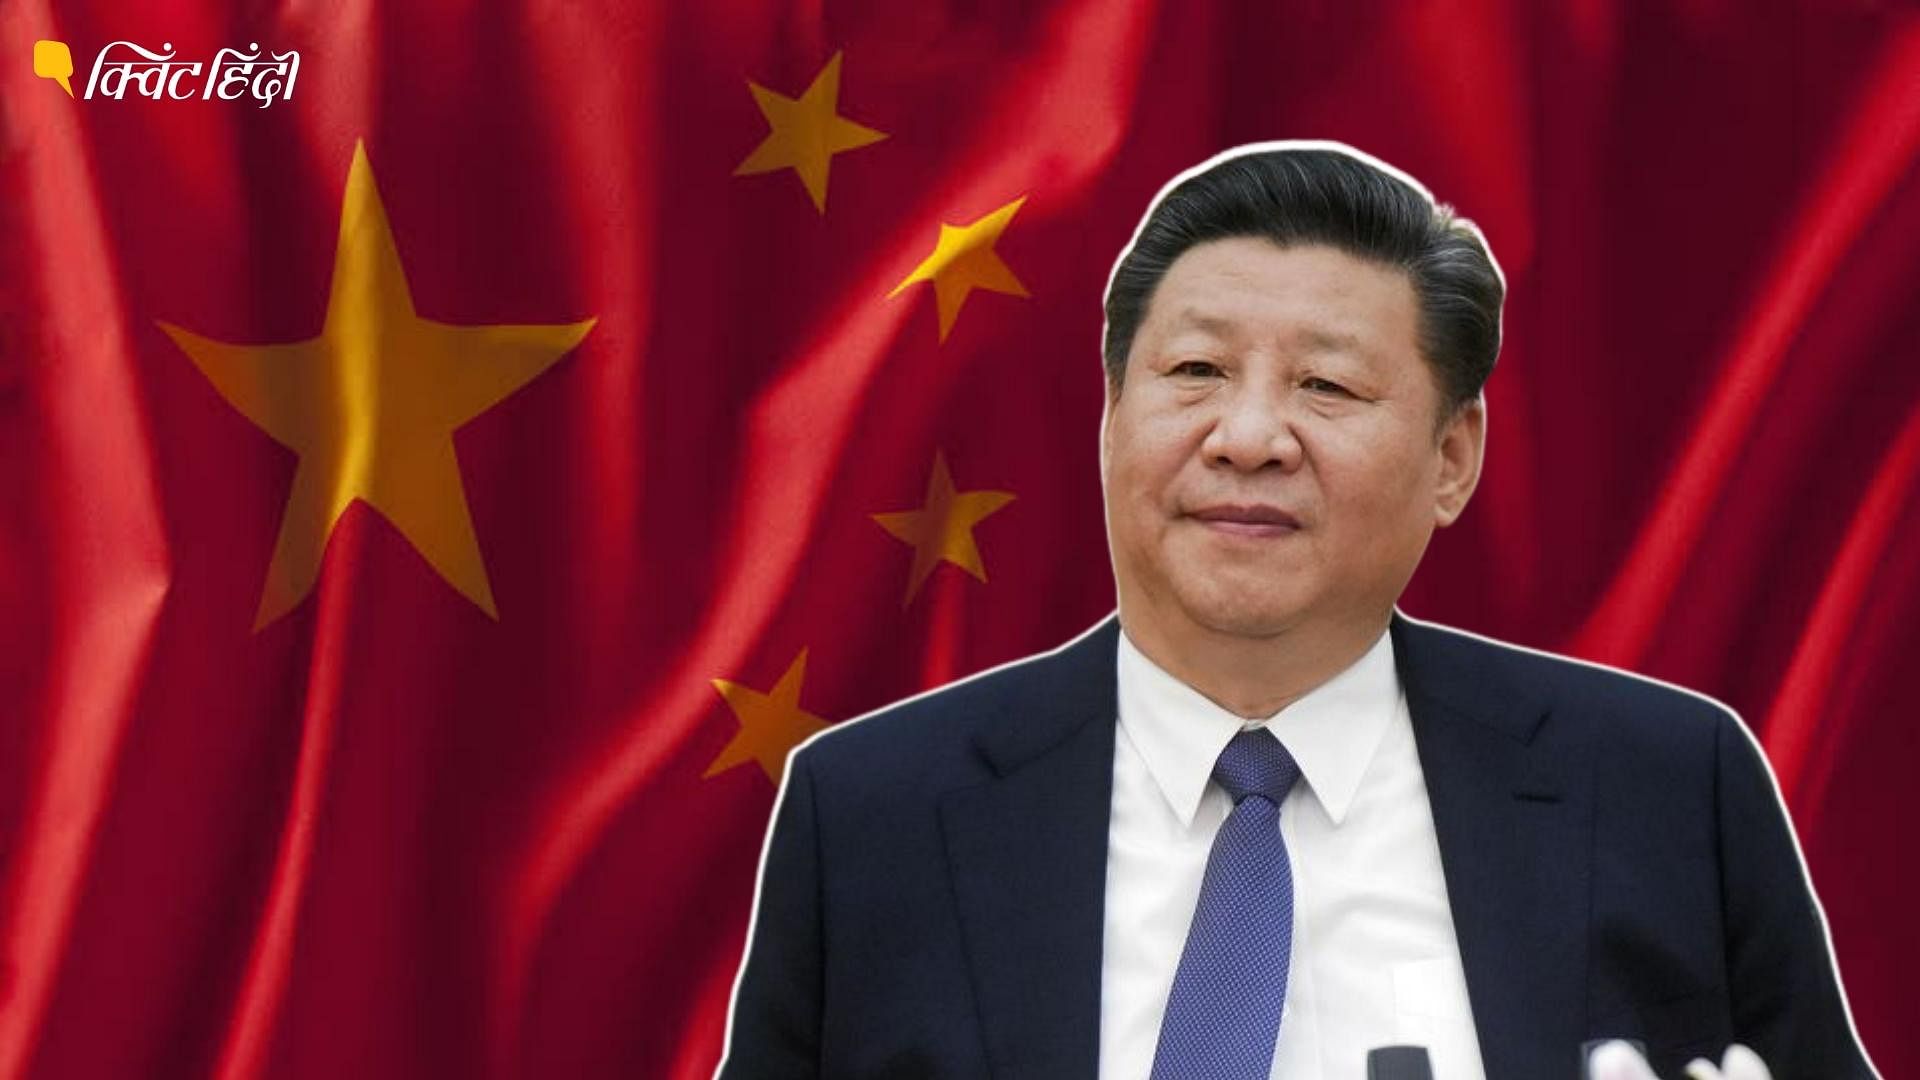 <div class="paragraphs"><p>Xi Jinping तीसरी बार बने राष्ट्रपति, क्या उग्र राष्ट्रवाद की तरफ बढ़ रहा चीन?</p></div>